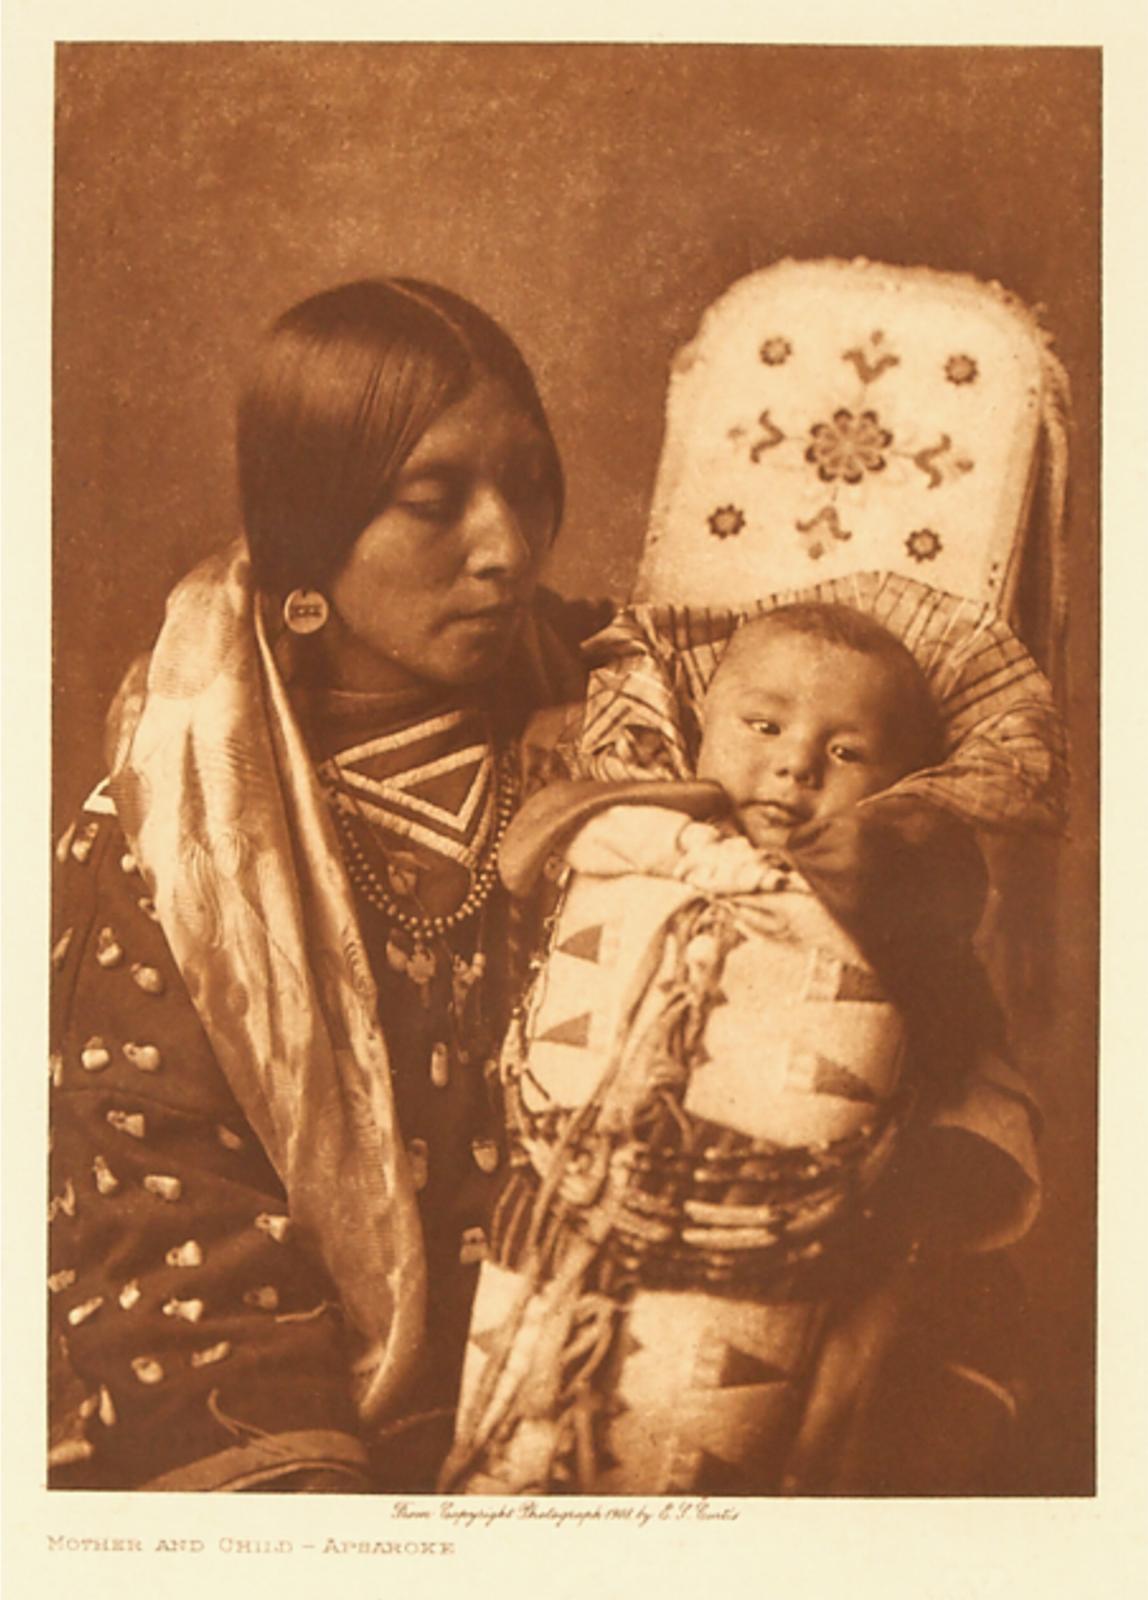 Edward Sherrif Curtis (1868-1952) - Mother And Child - Apsaroke, 1908